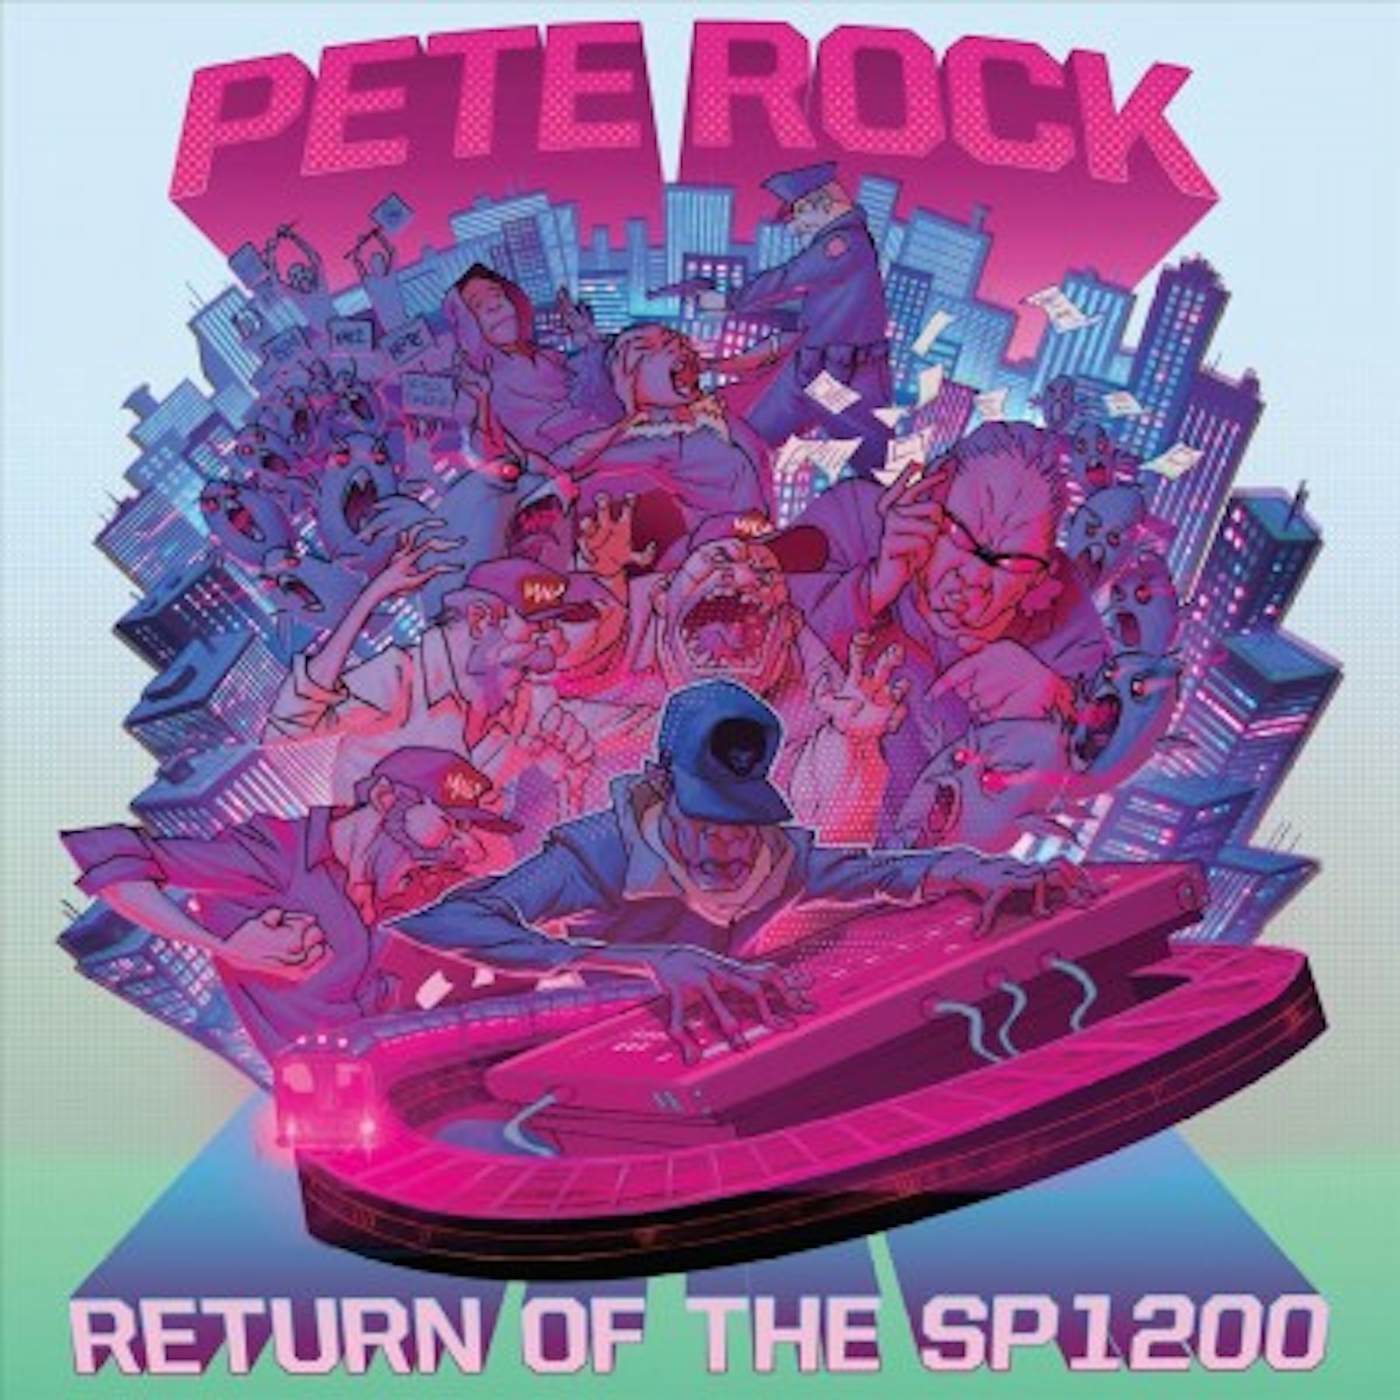 Pete Rock RETURN OF THE SP-1200 CD